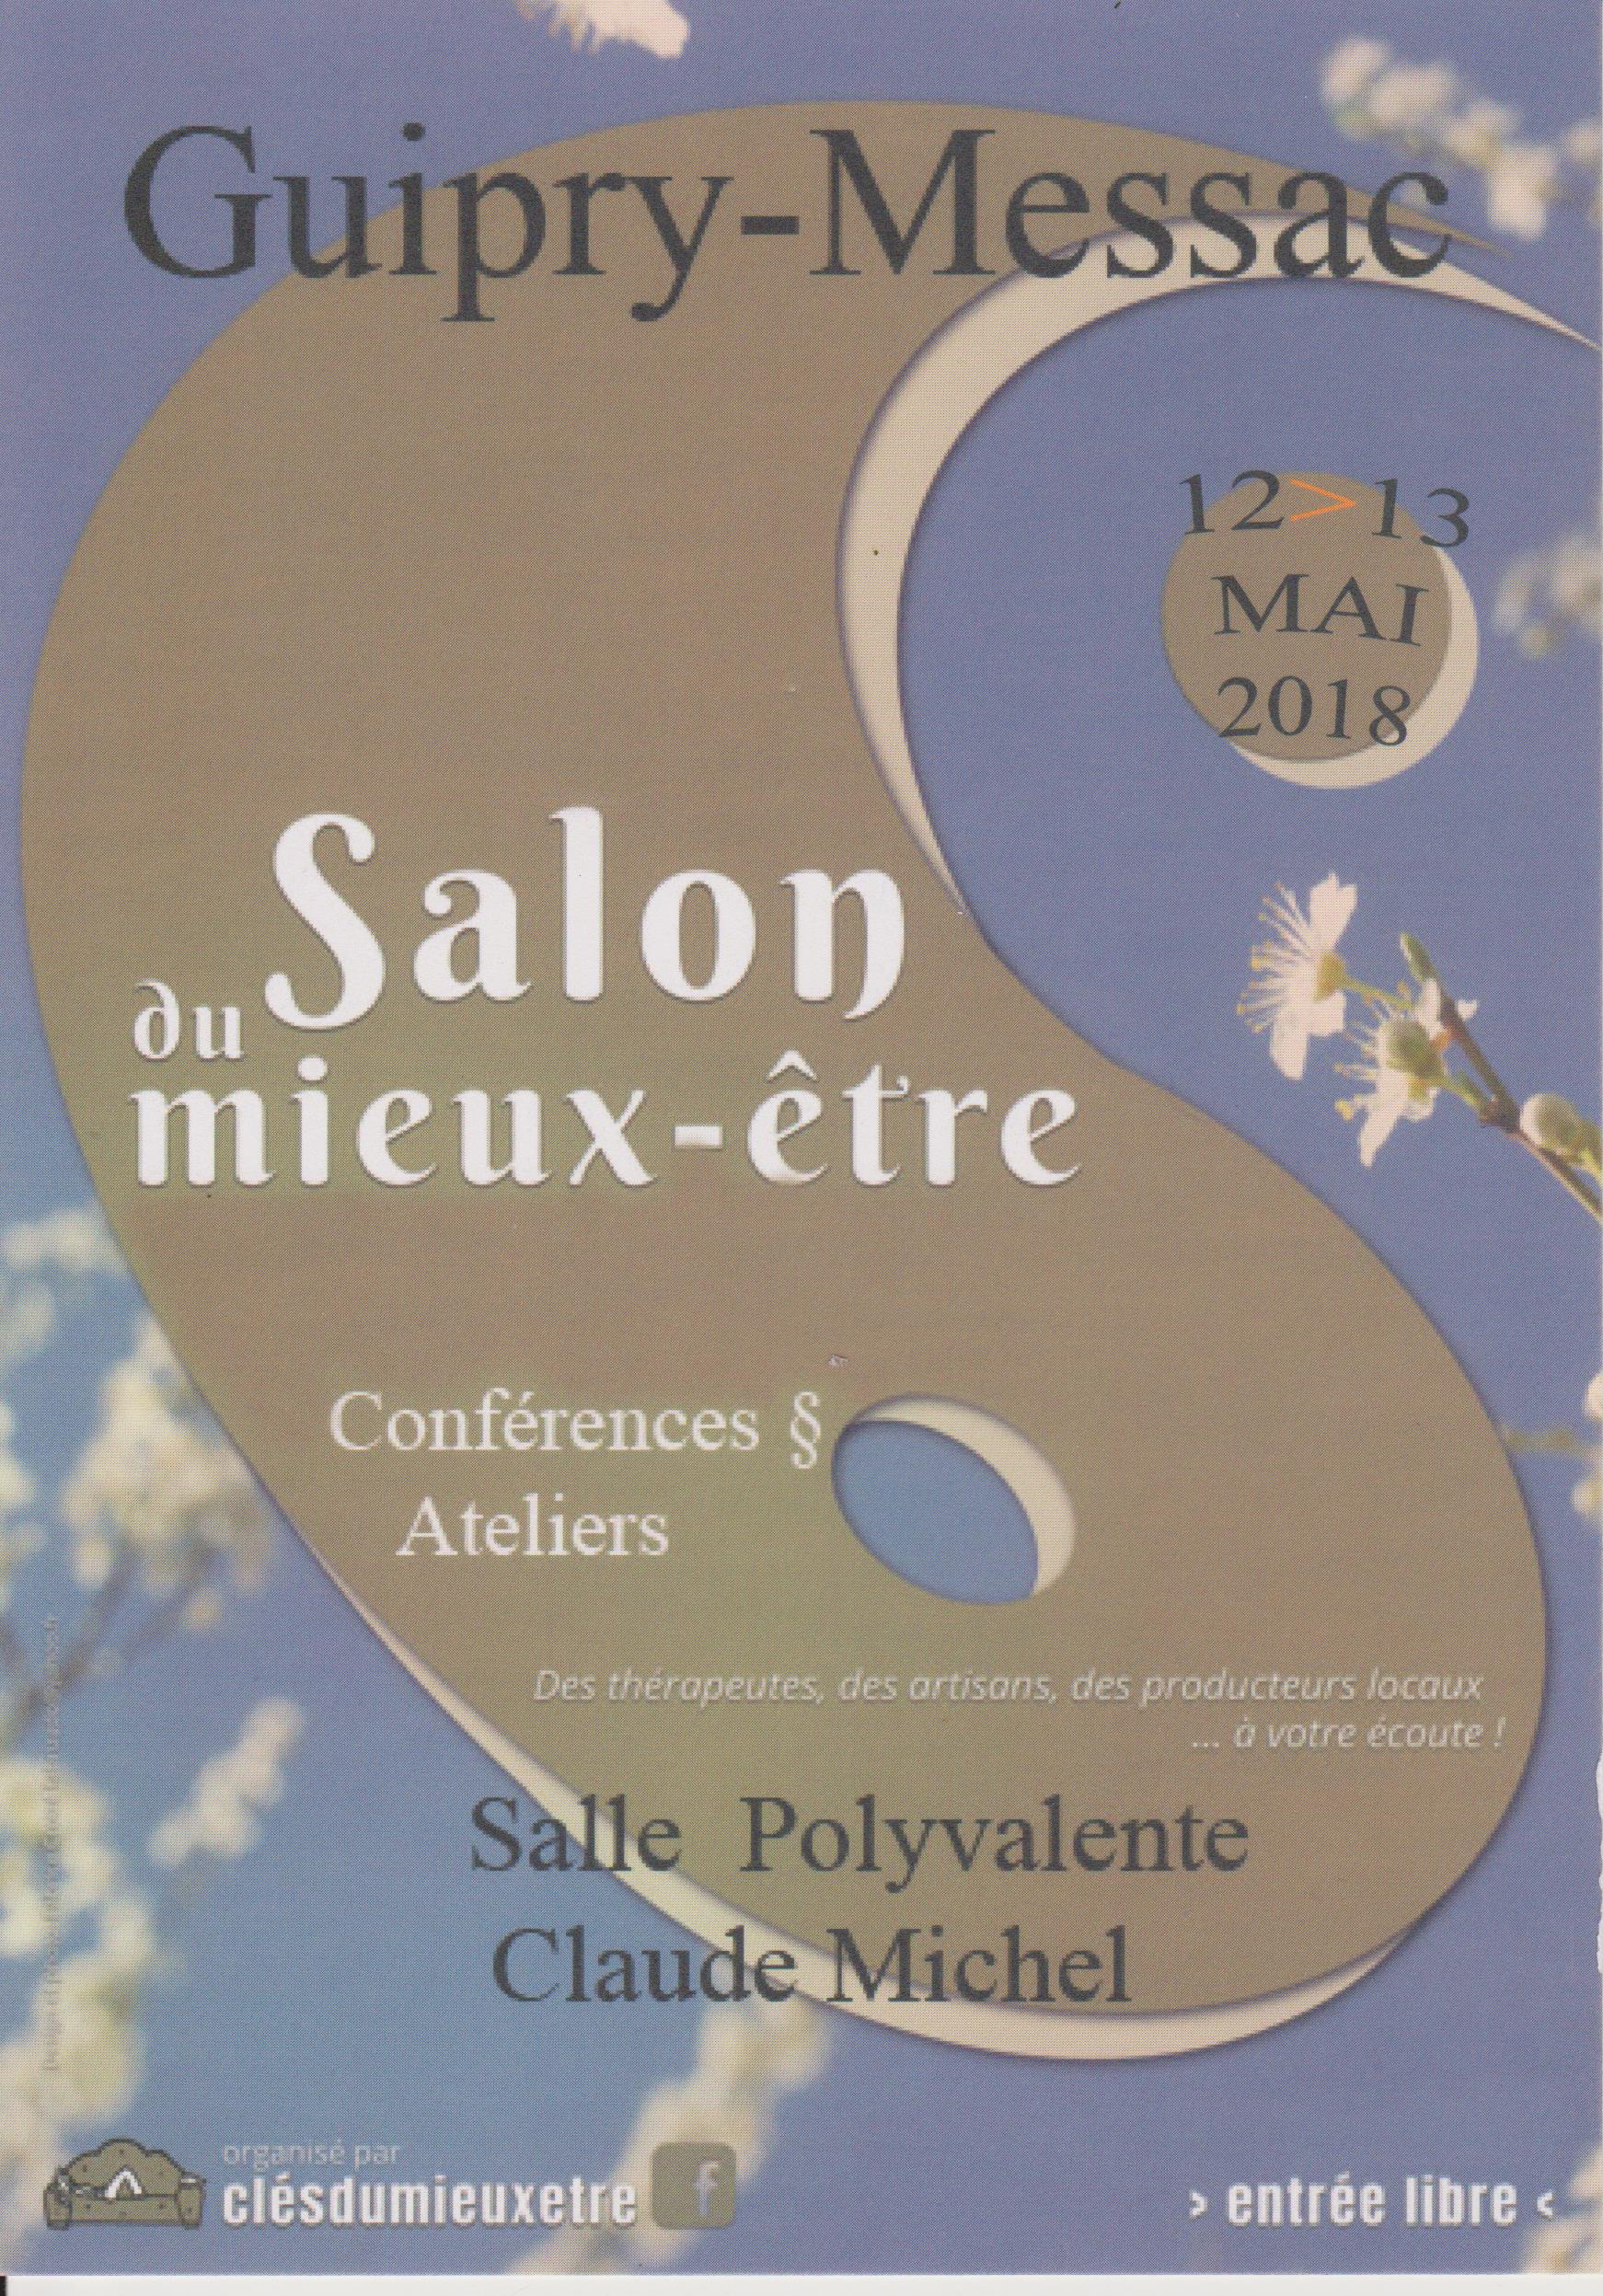 Salon Guipry-Messac édition du 12-13 mai 2018